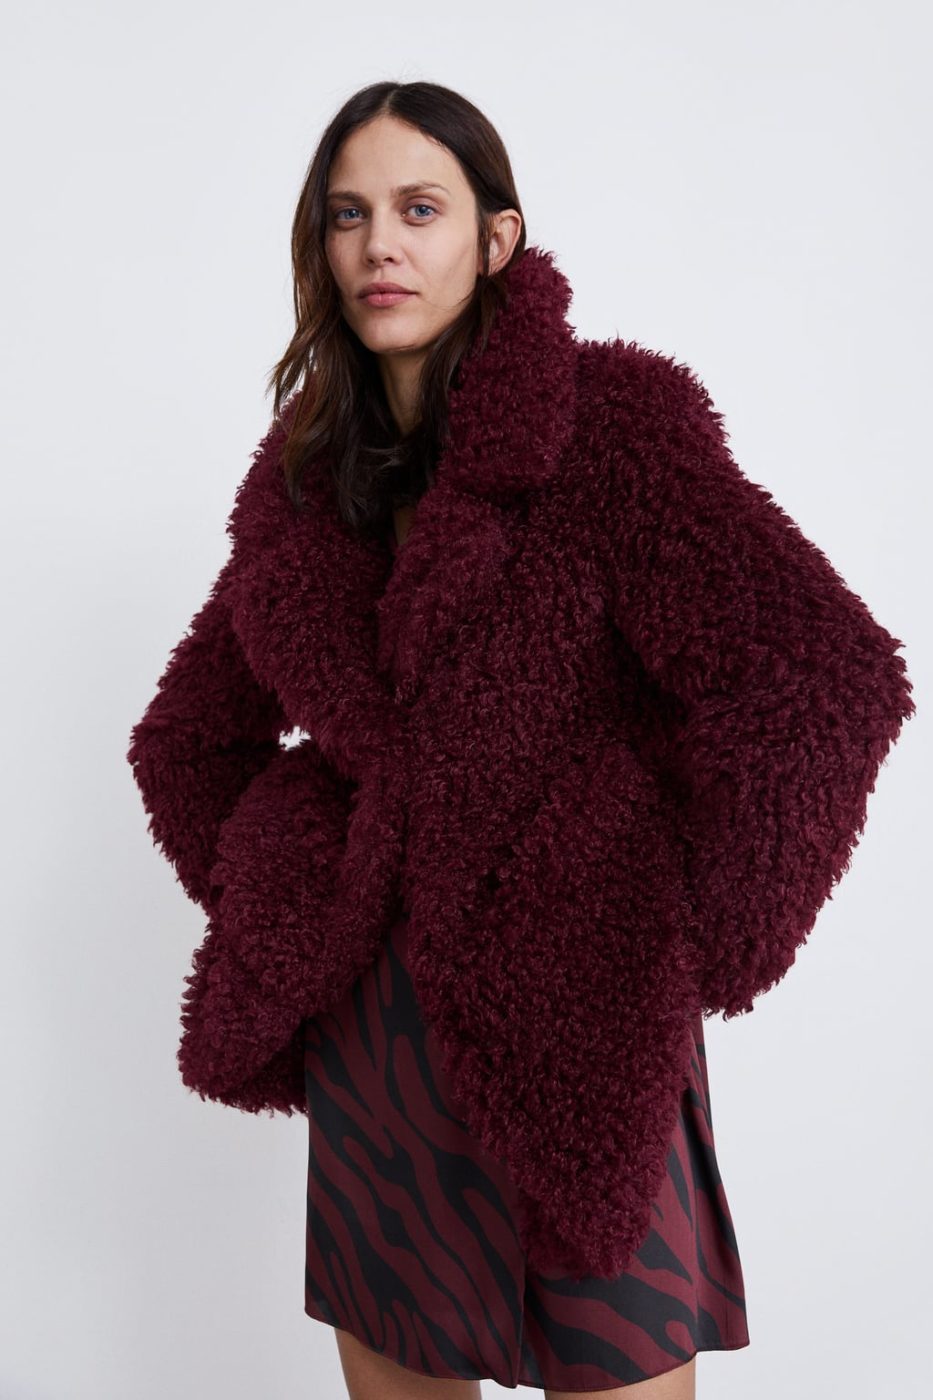 Teddy-bear coat – Zara